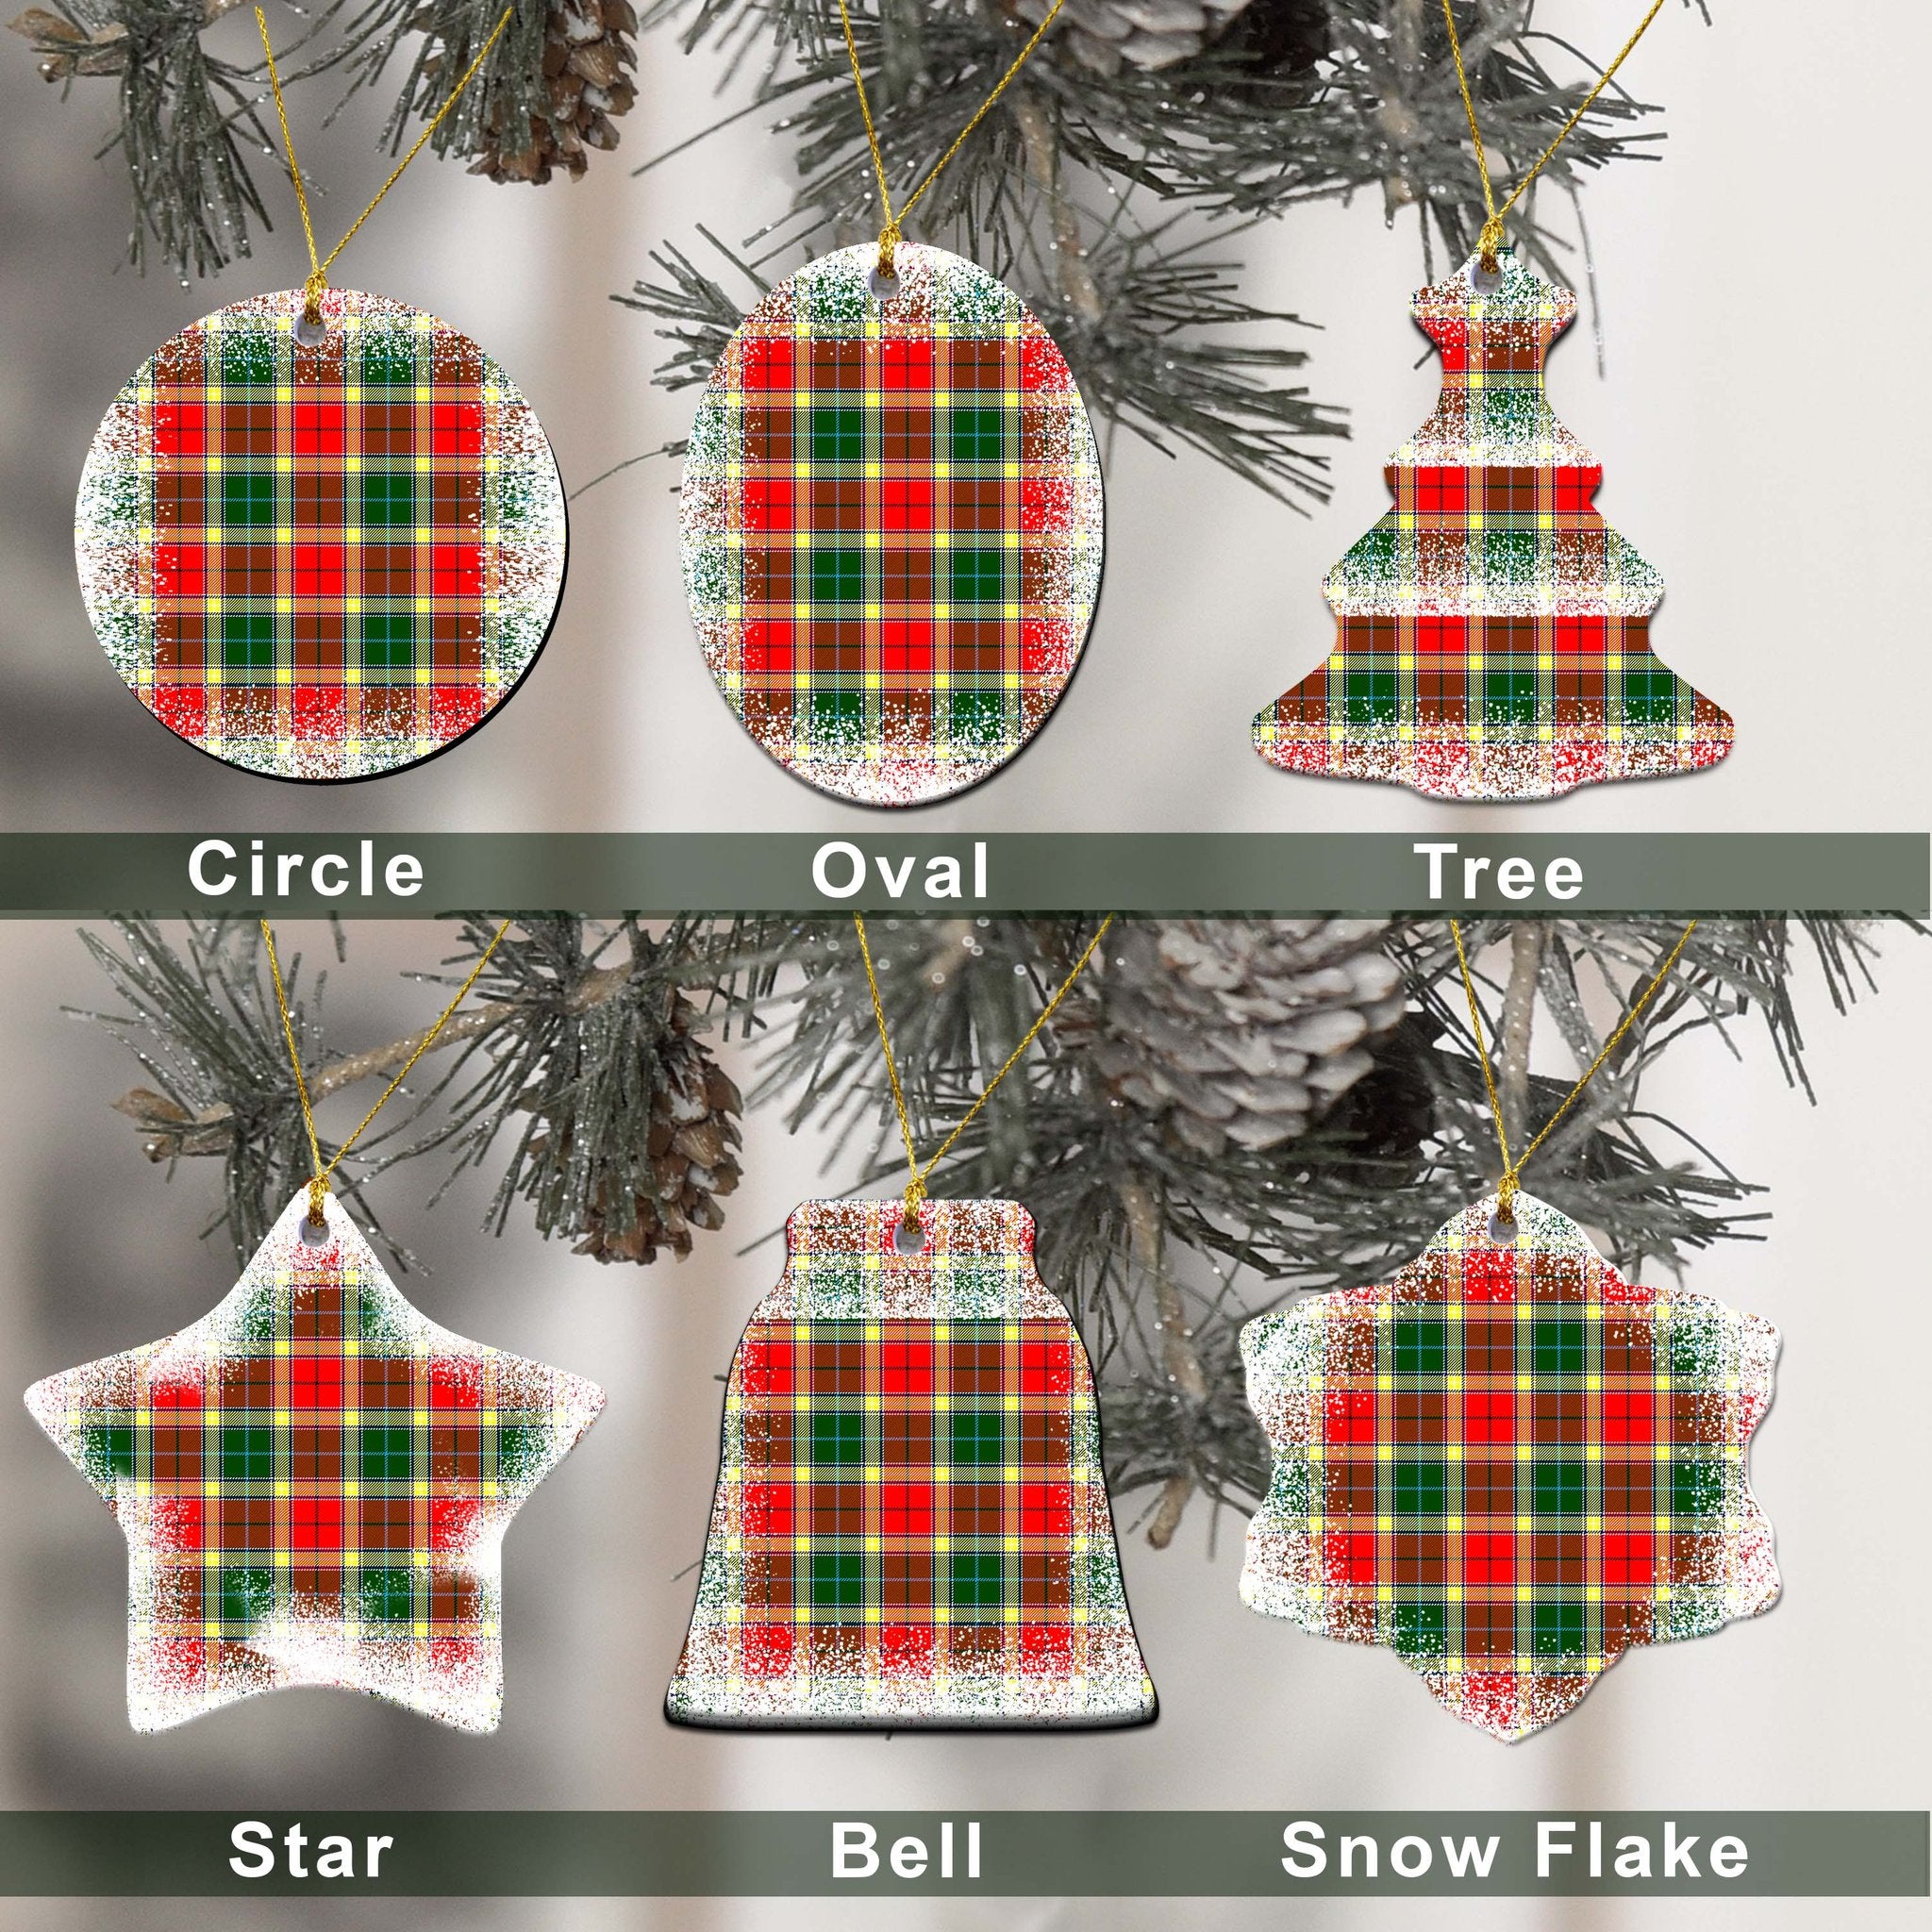 Gibson Tartan Christmas Ceramic Ornament - Snow Style